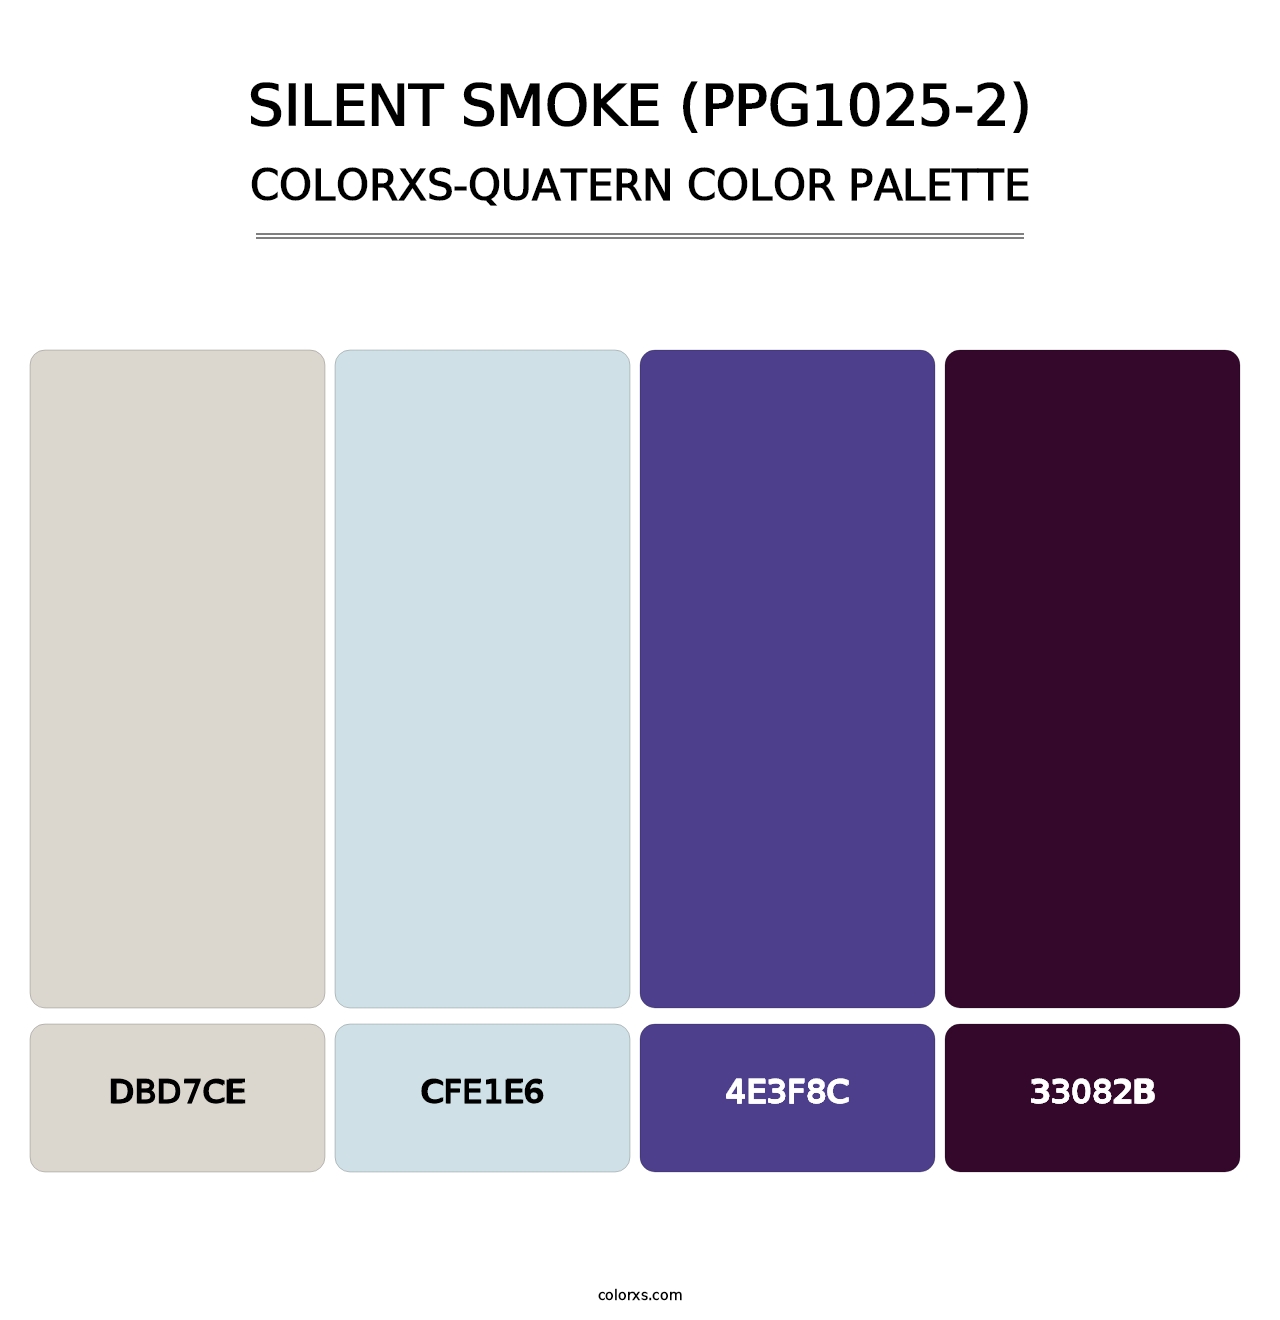 Silent Smoke (PPG1025-2) - Colorxs Quatern Palette